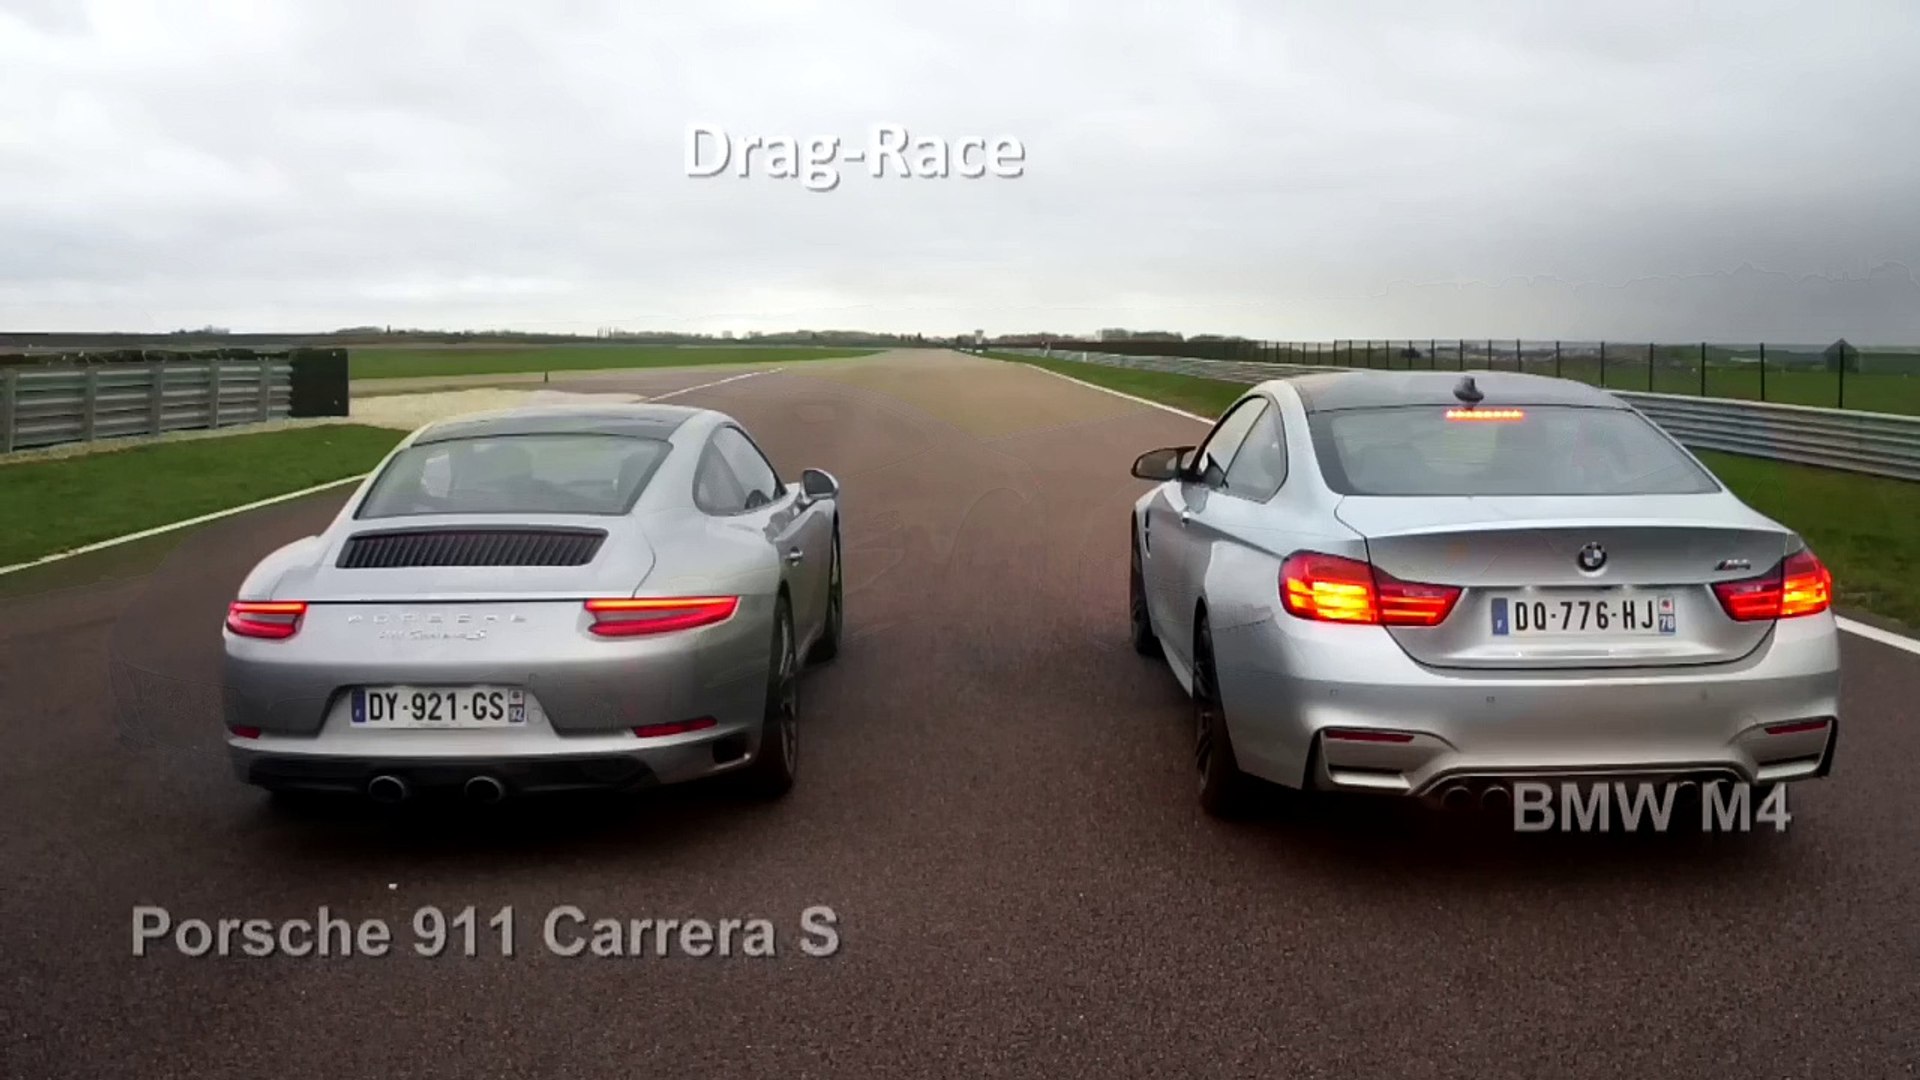 Drag-race : Porsche 911 Carrera S vs. BMW M4 - Vidéo Dailymotion